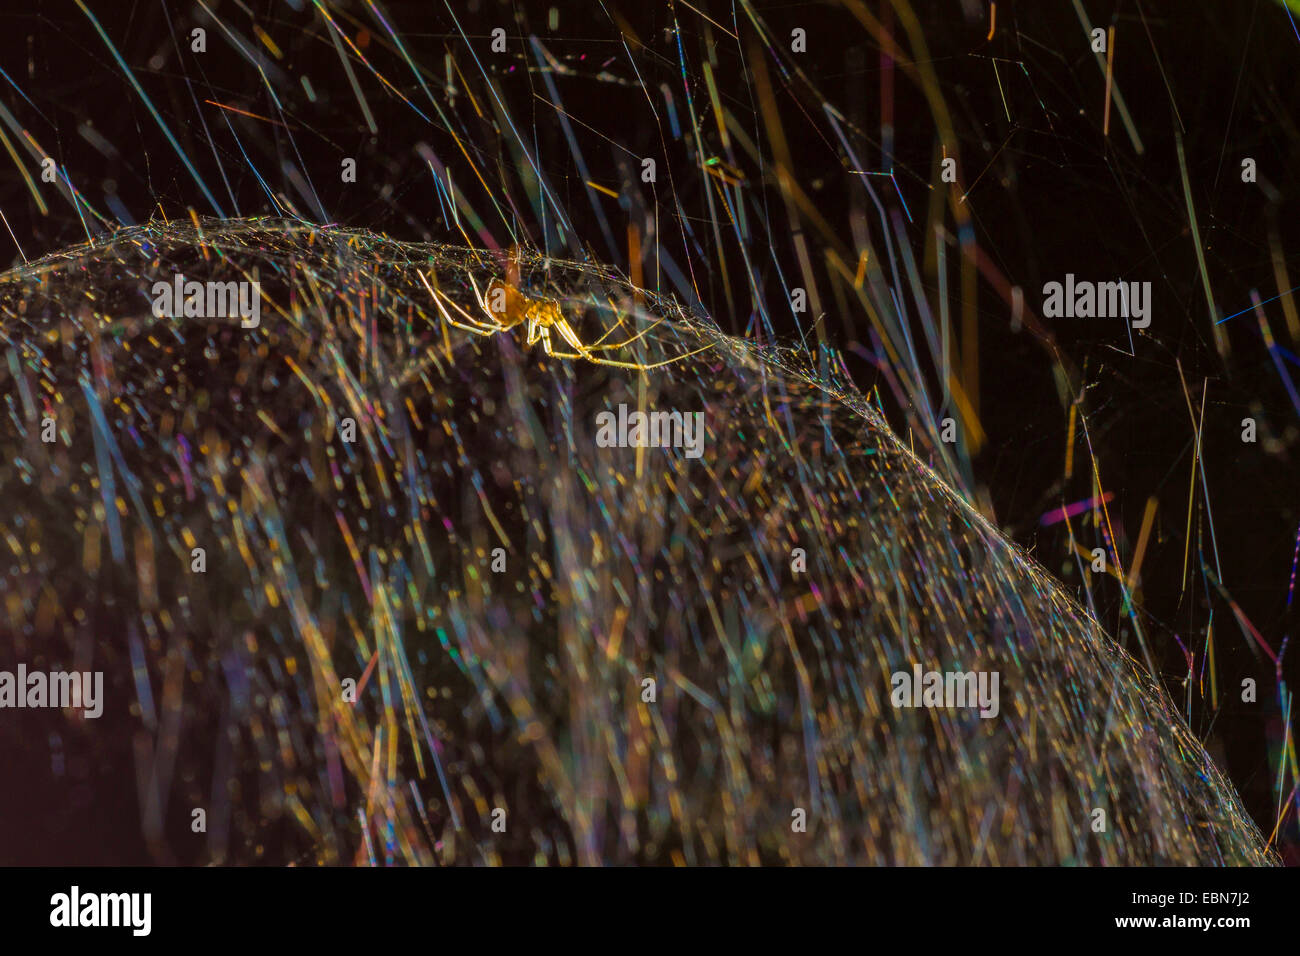 sheet-web weavers, sheet-web spinners, line-weaving spiders, line weavers, money spiders (Linyphiidae), in spherical net in backlight, Germany, Bavaria Stock Photo